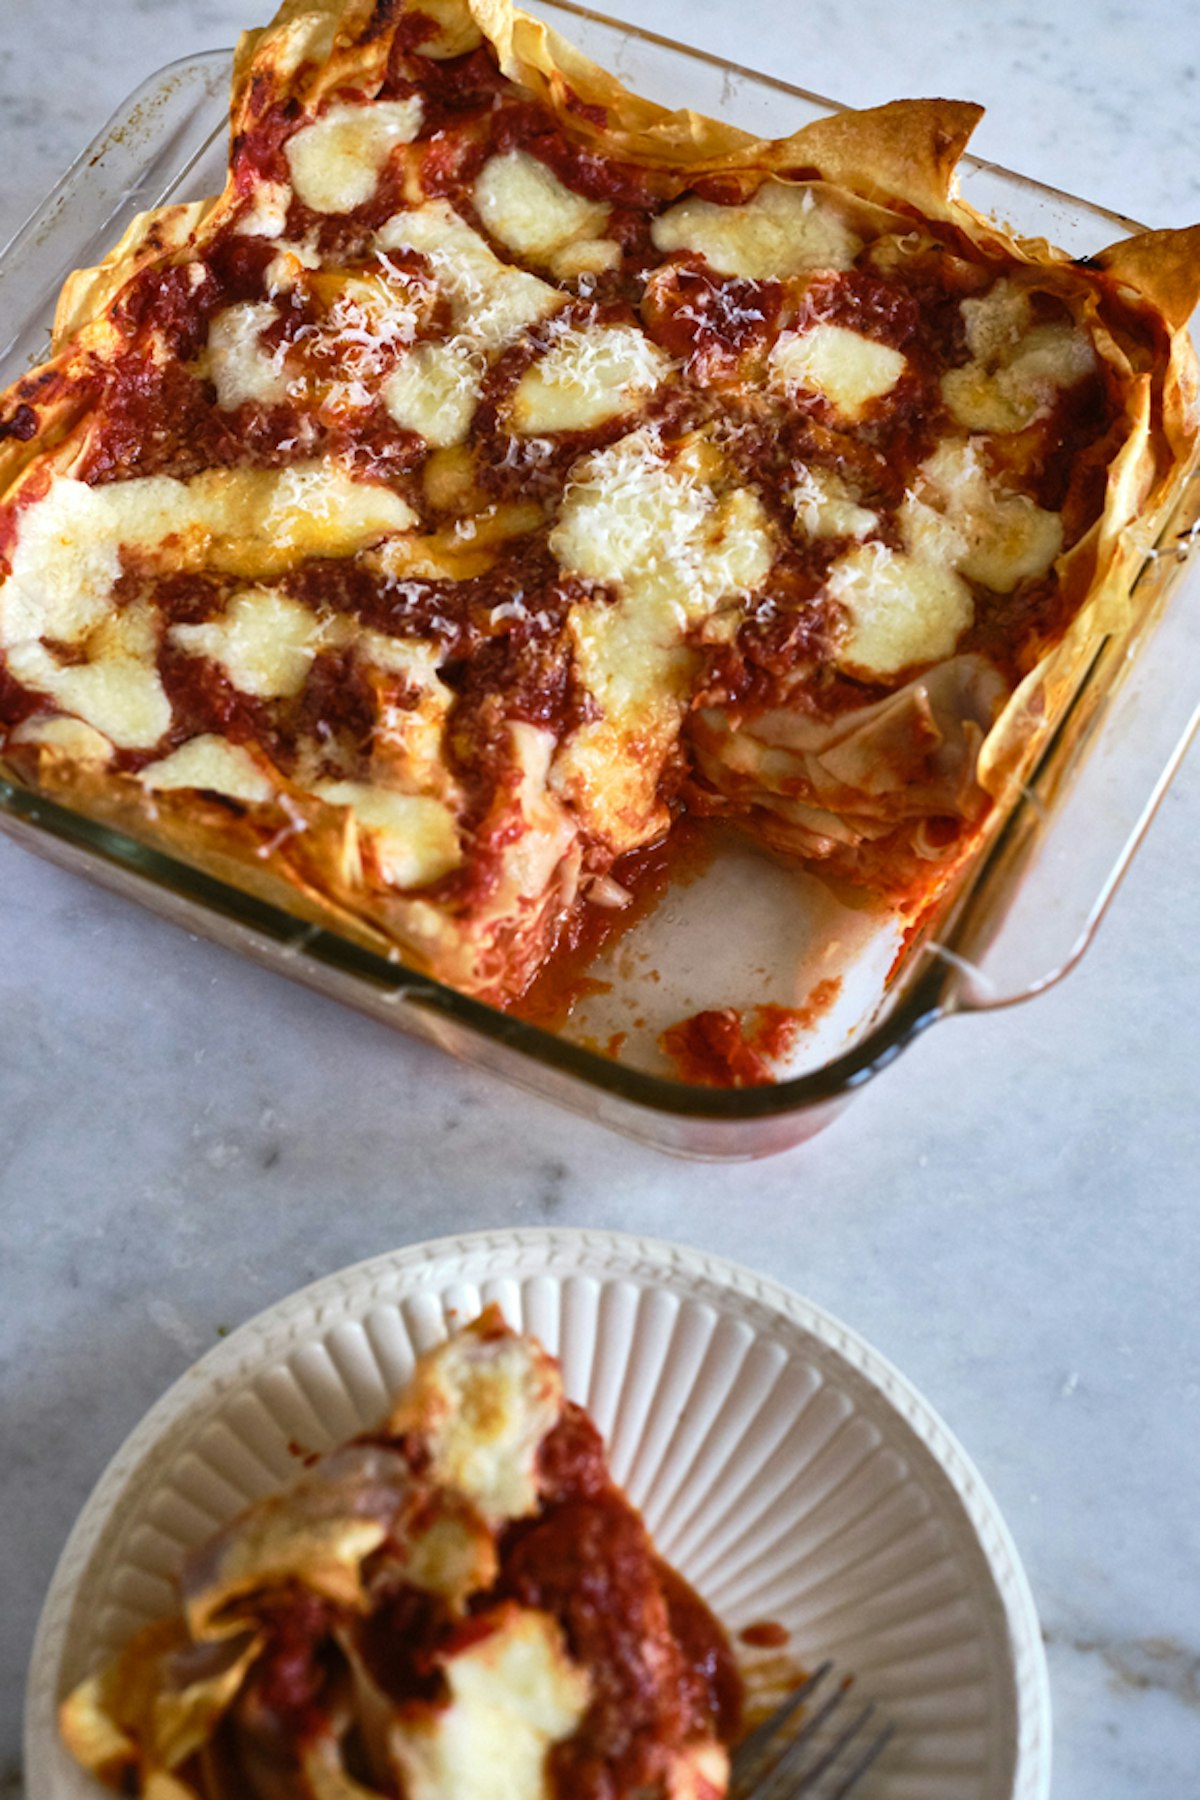 https://images.101cookbooks.com/best-lasagna-recipe-v.jpg?w=1200&auto=format